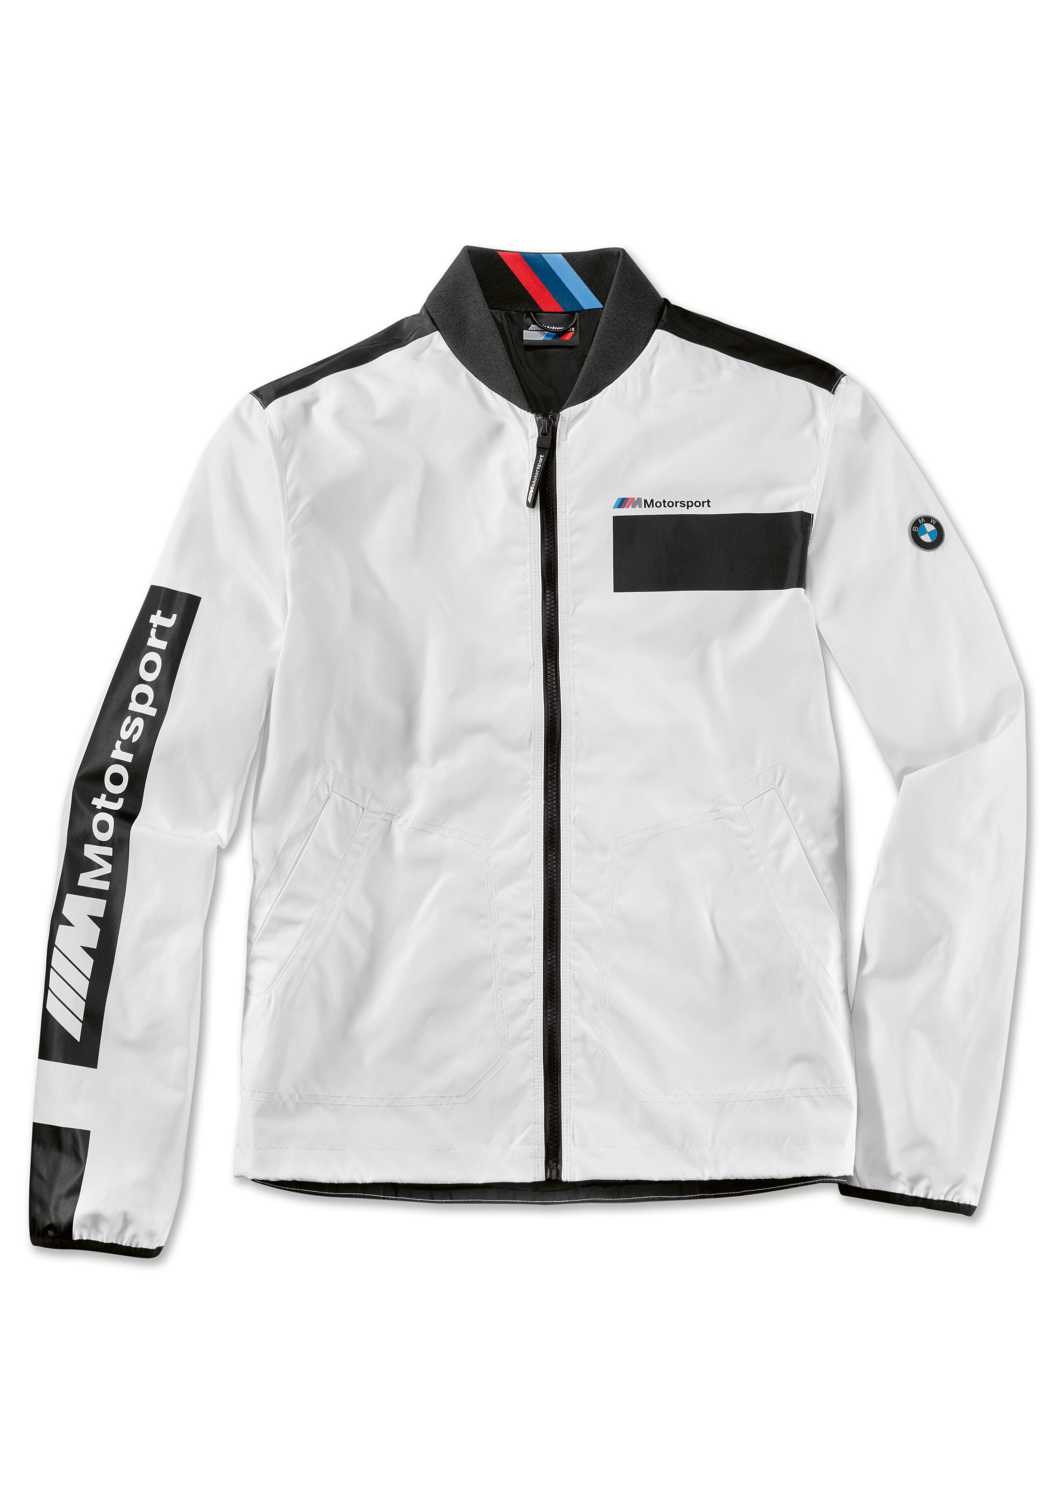 m motorsport jacket